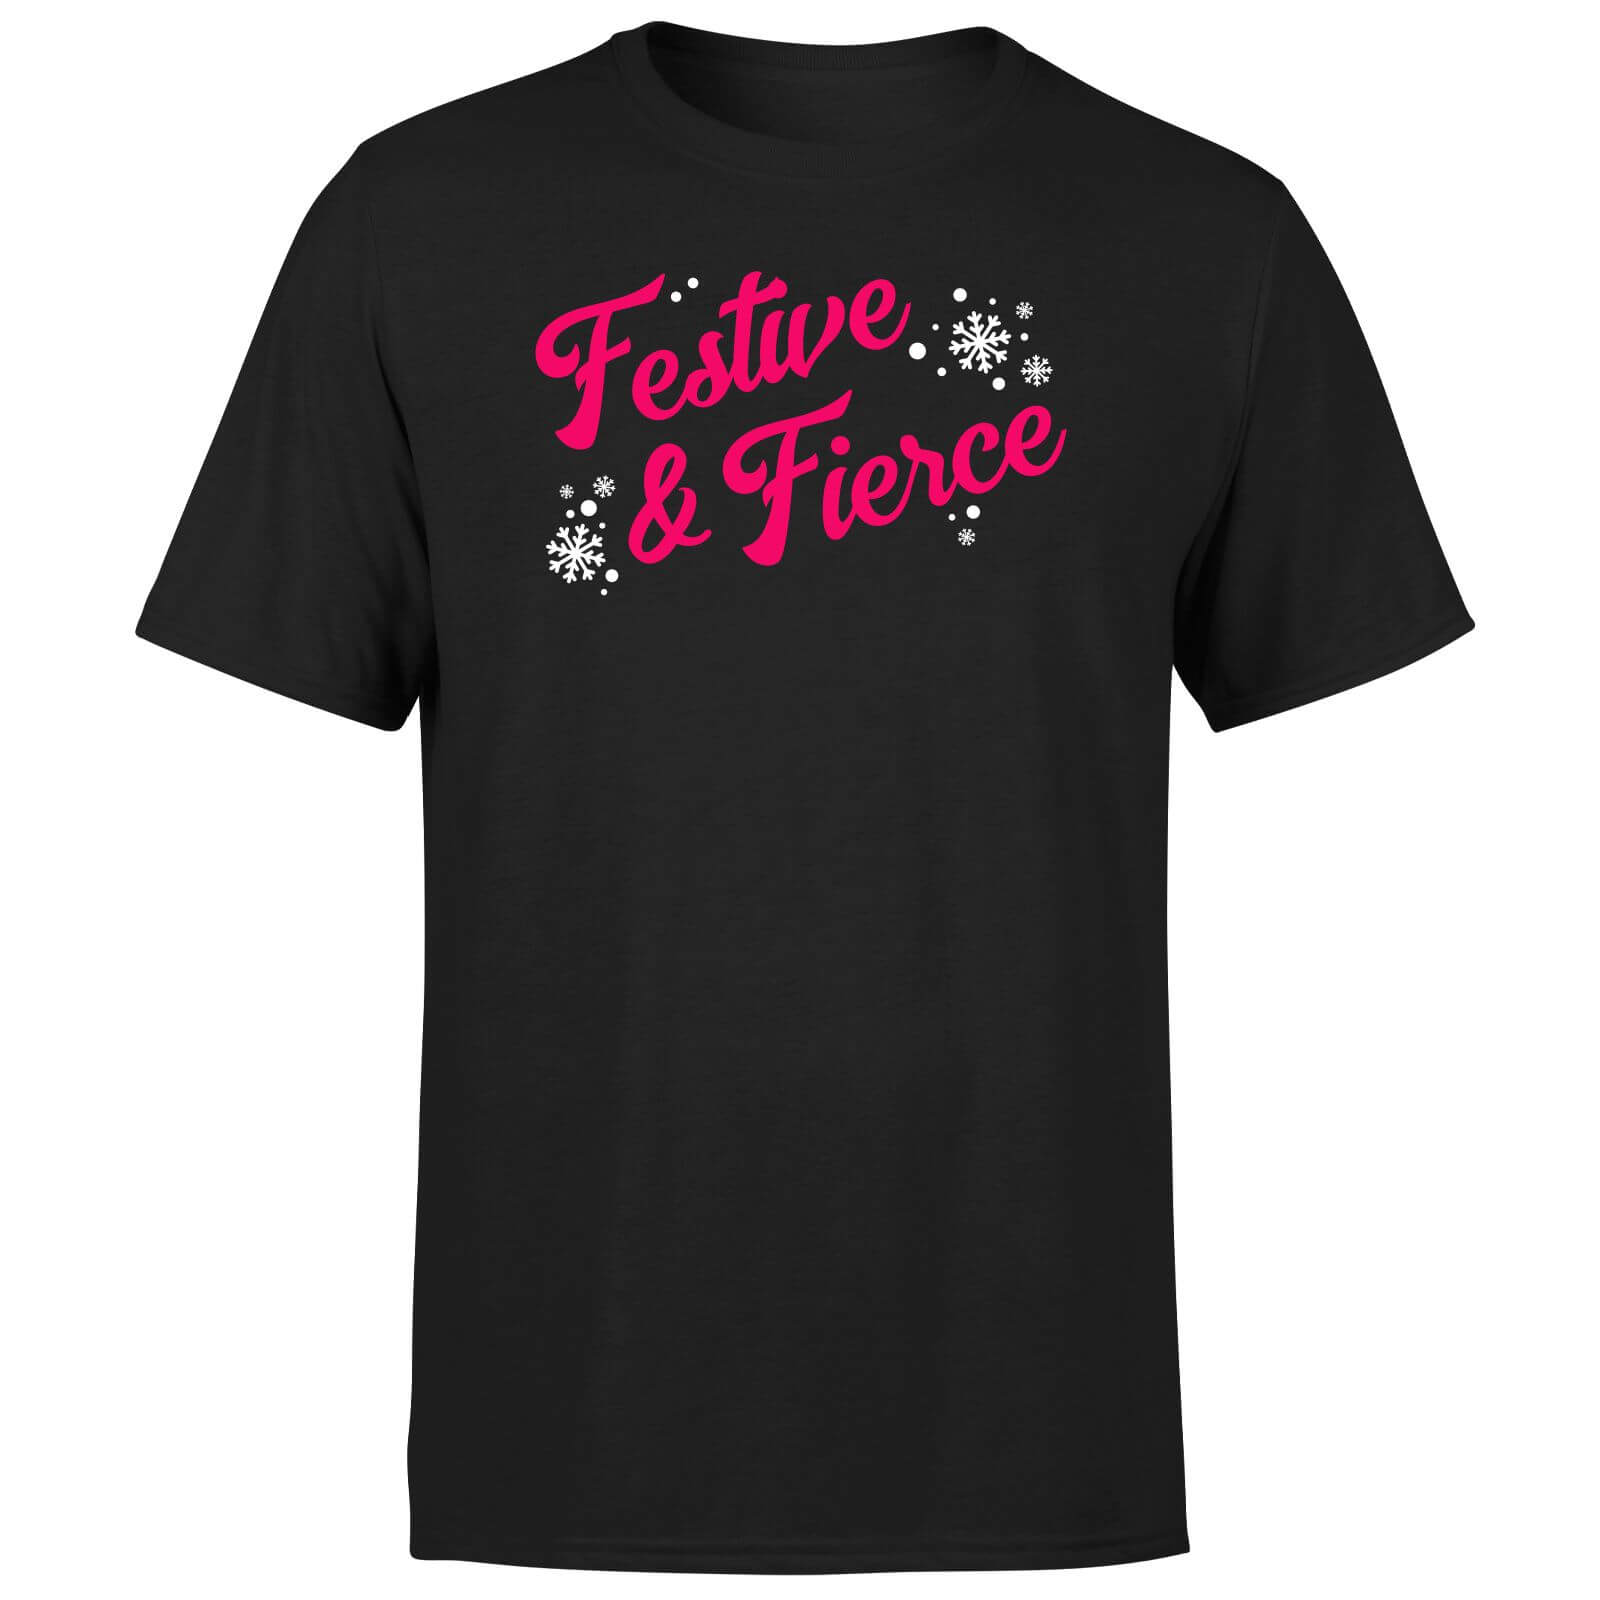 Festive & Fierce Men's T-Shirt - Black - XS - Black